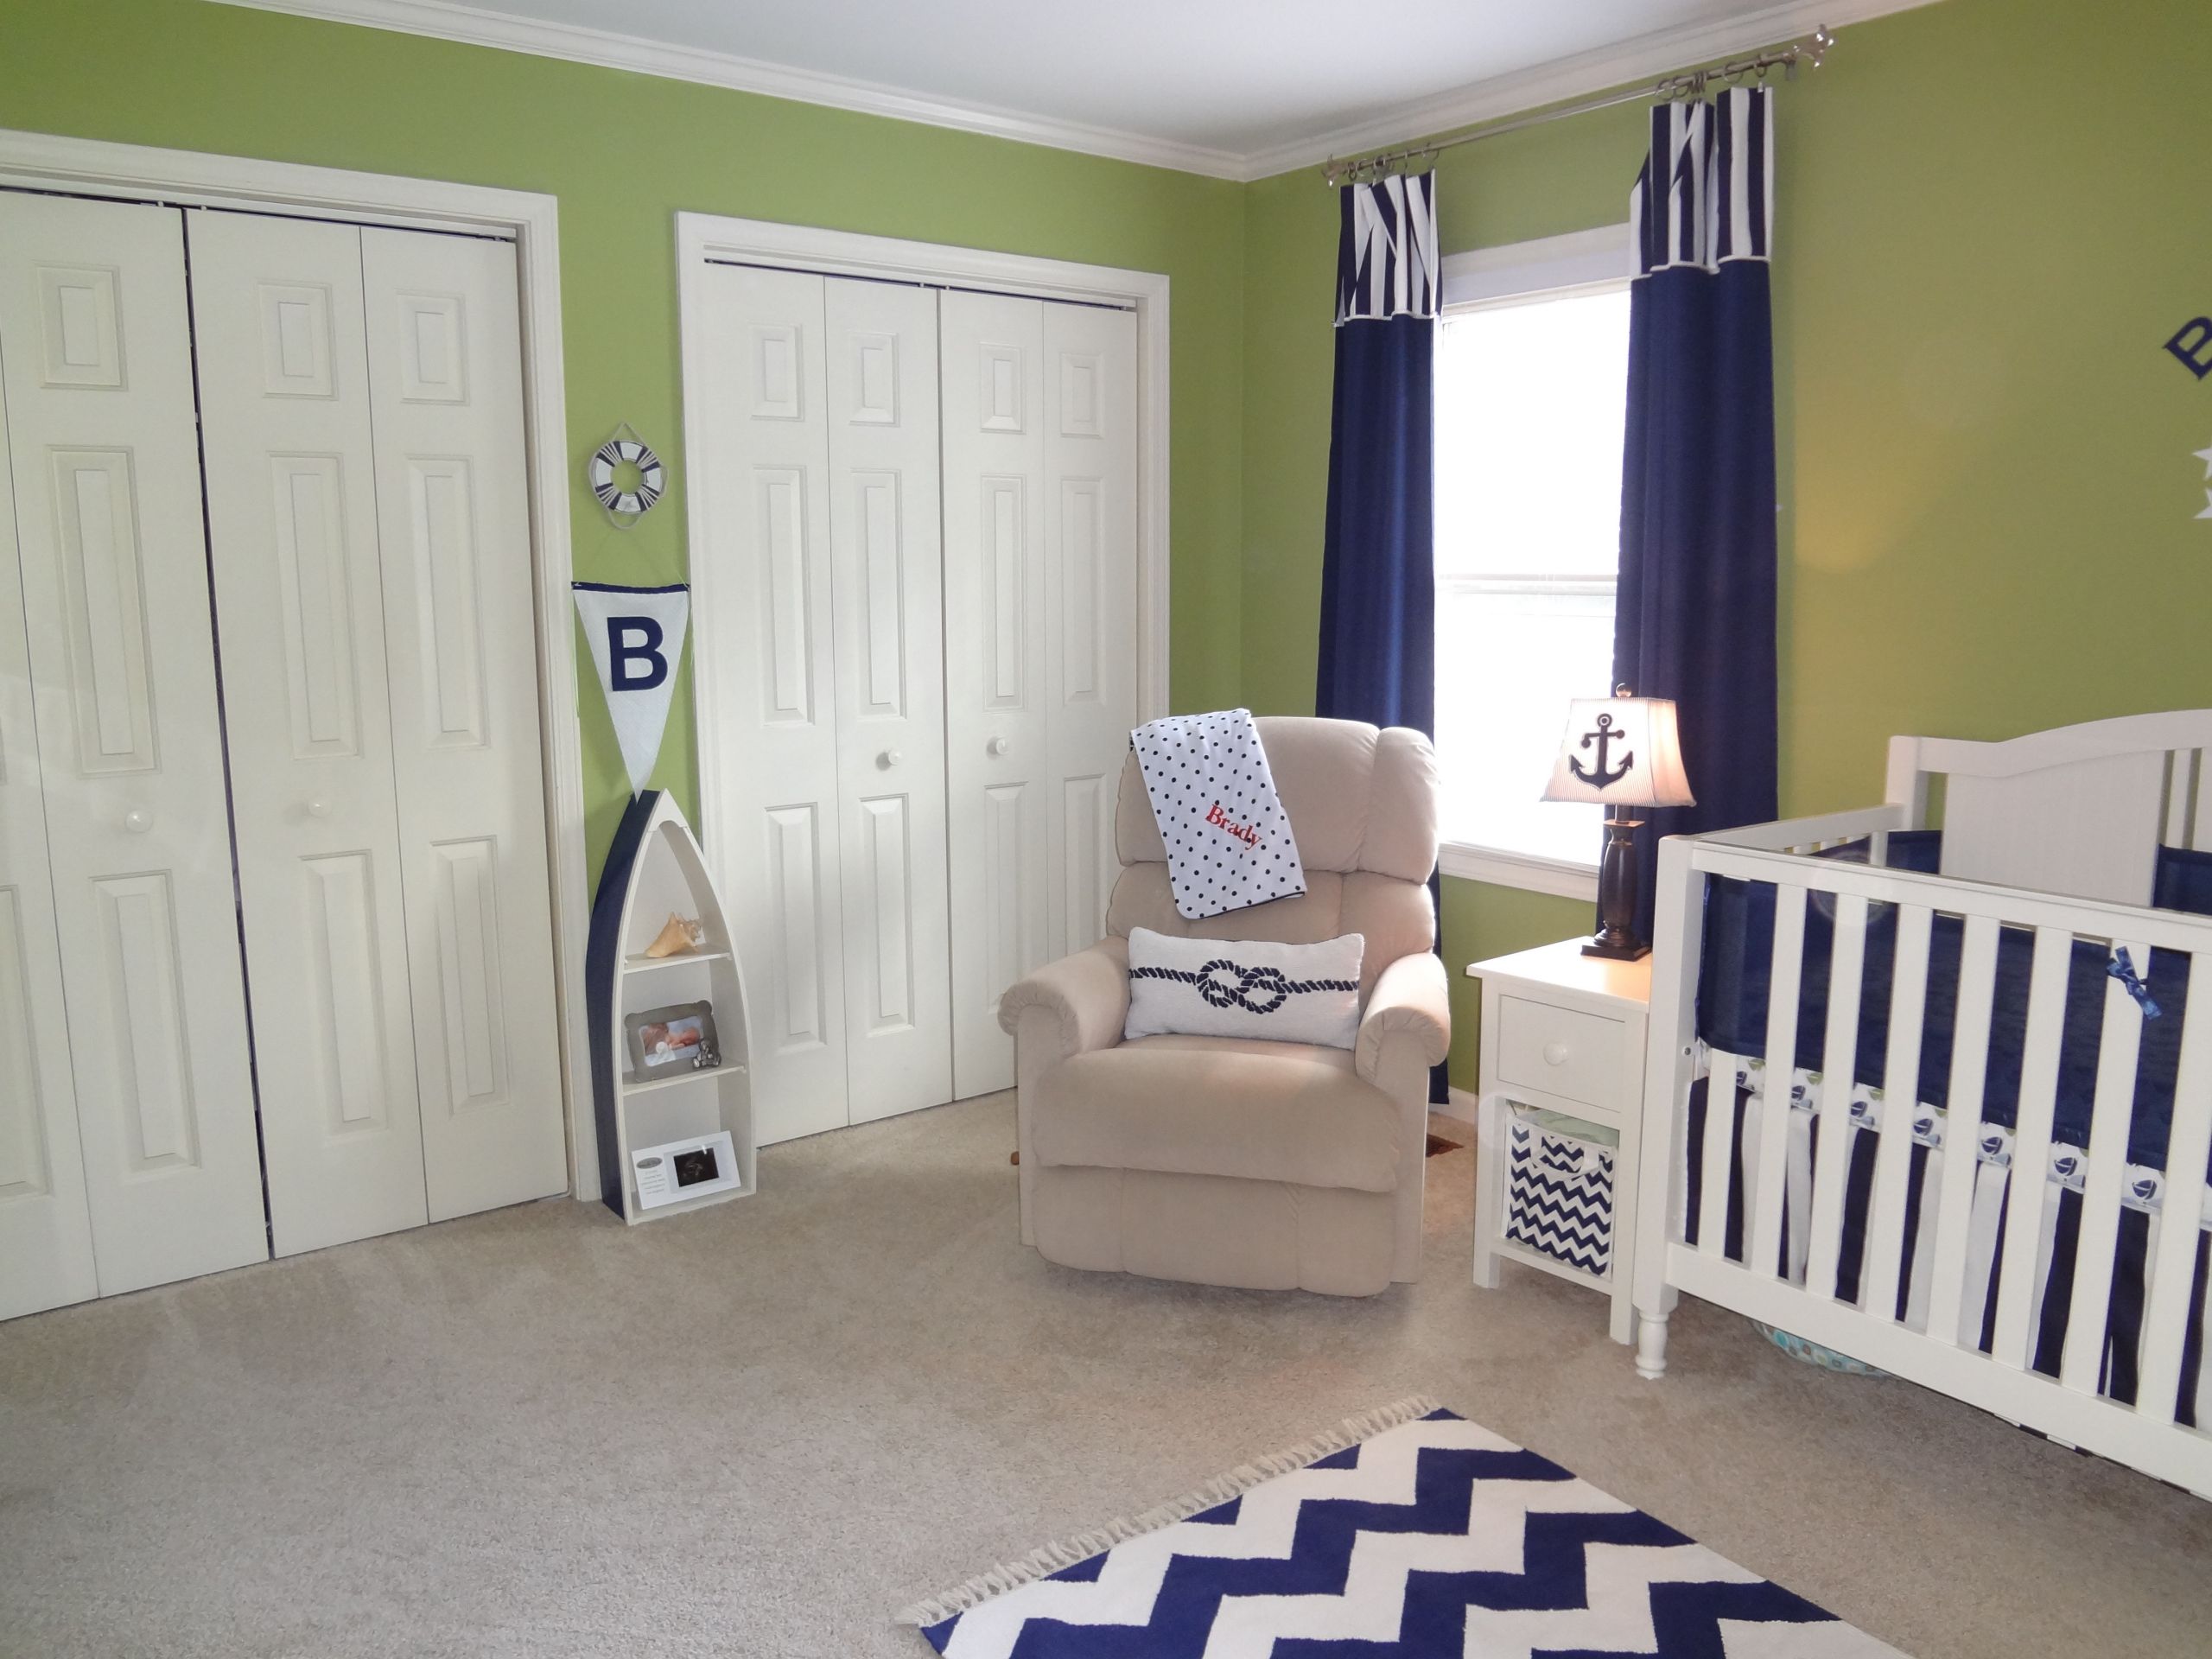 Anchor Baby Room Decor
 Green and Navy Nautical Nursery Project Nursery